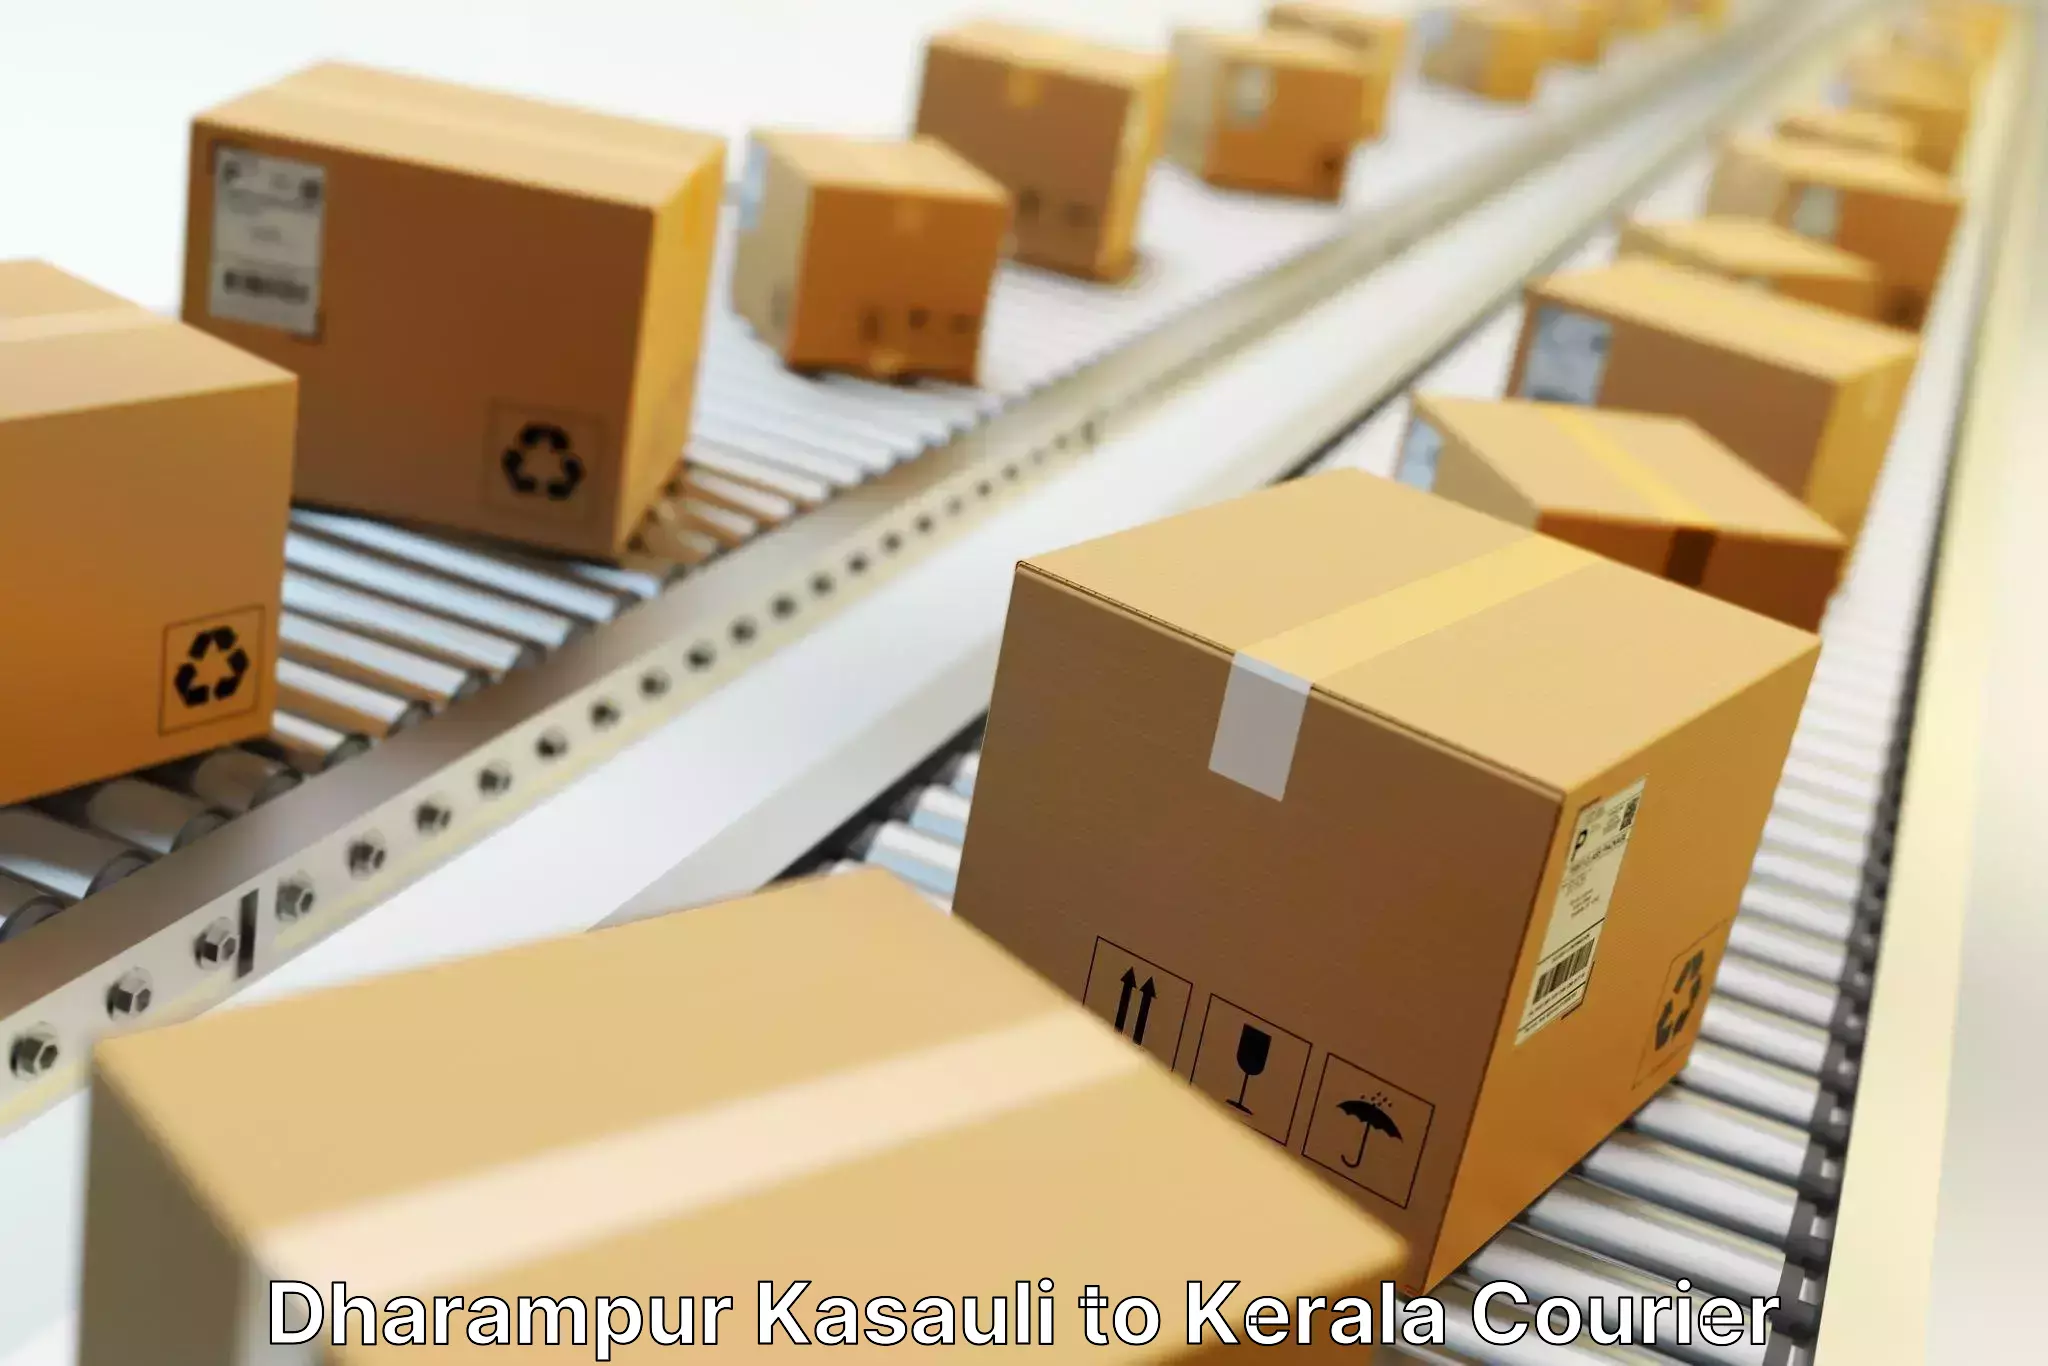 International parcel service Dharampur Kasauli to Kollam